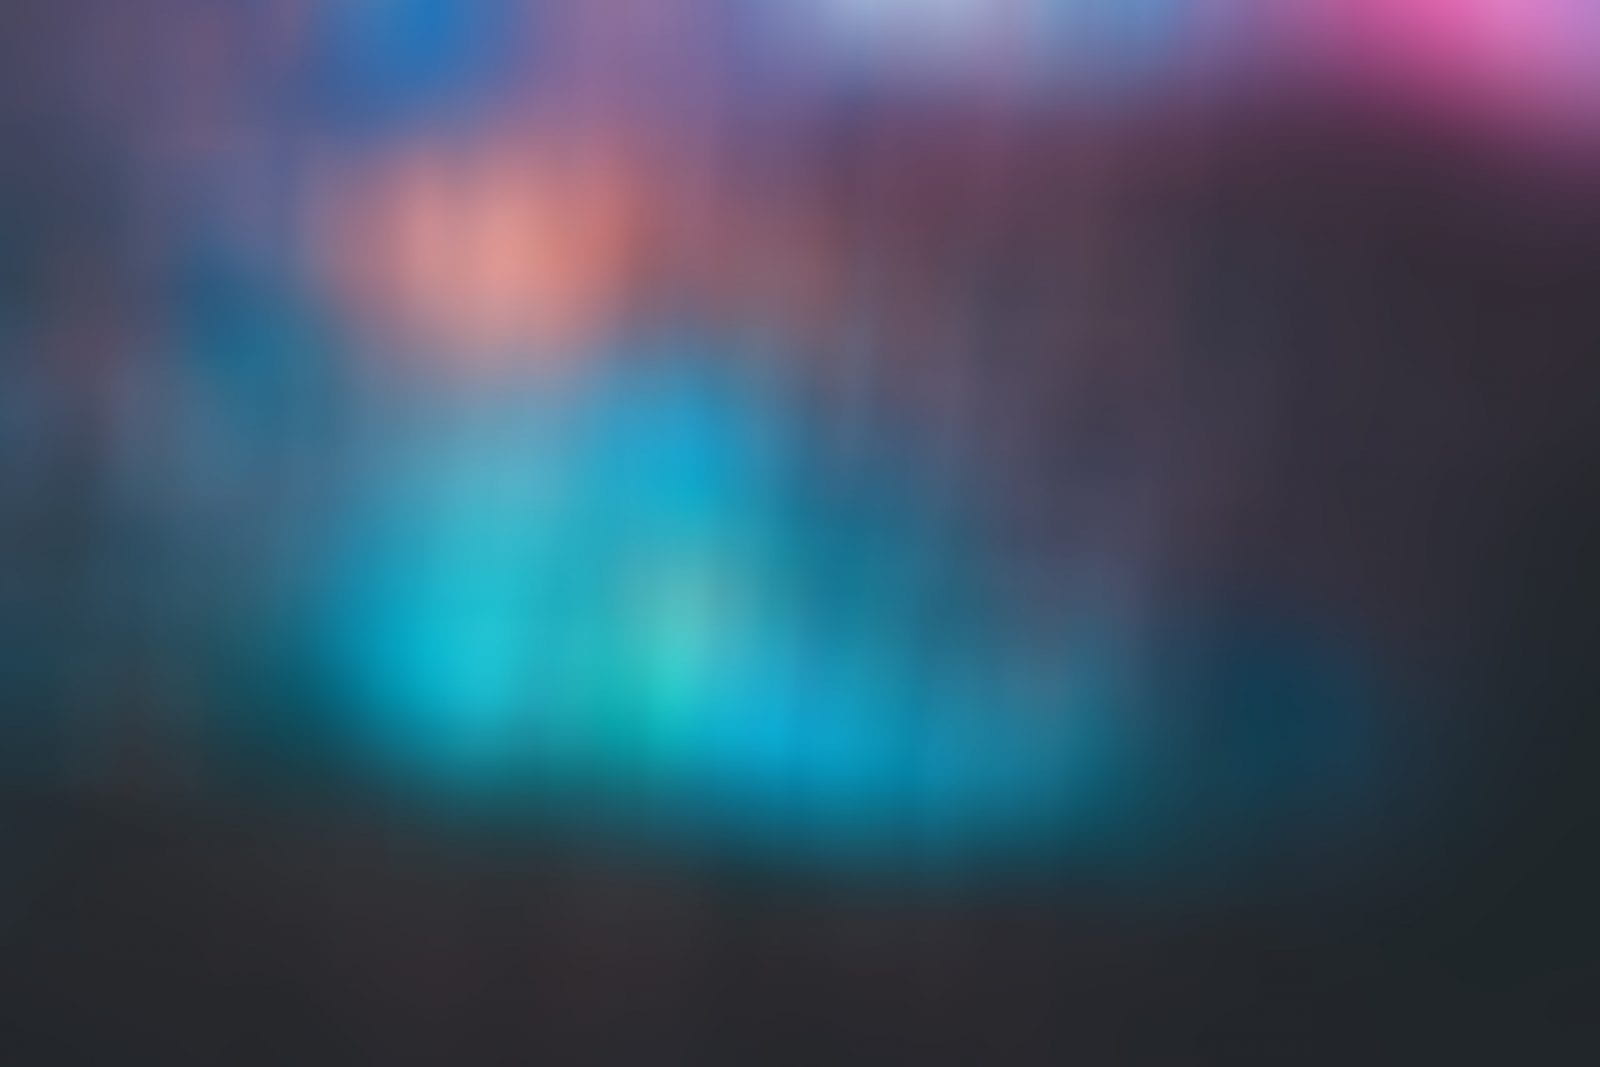 blurred colors of various brightness